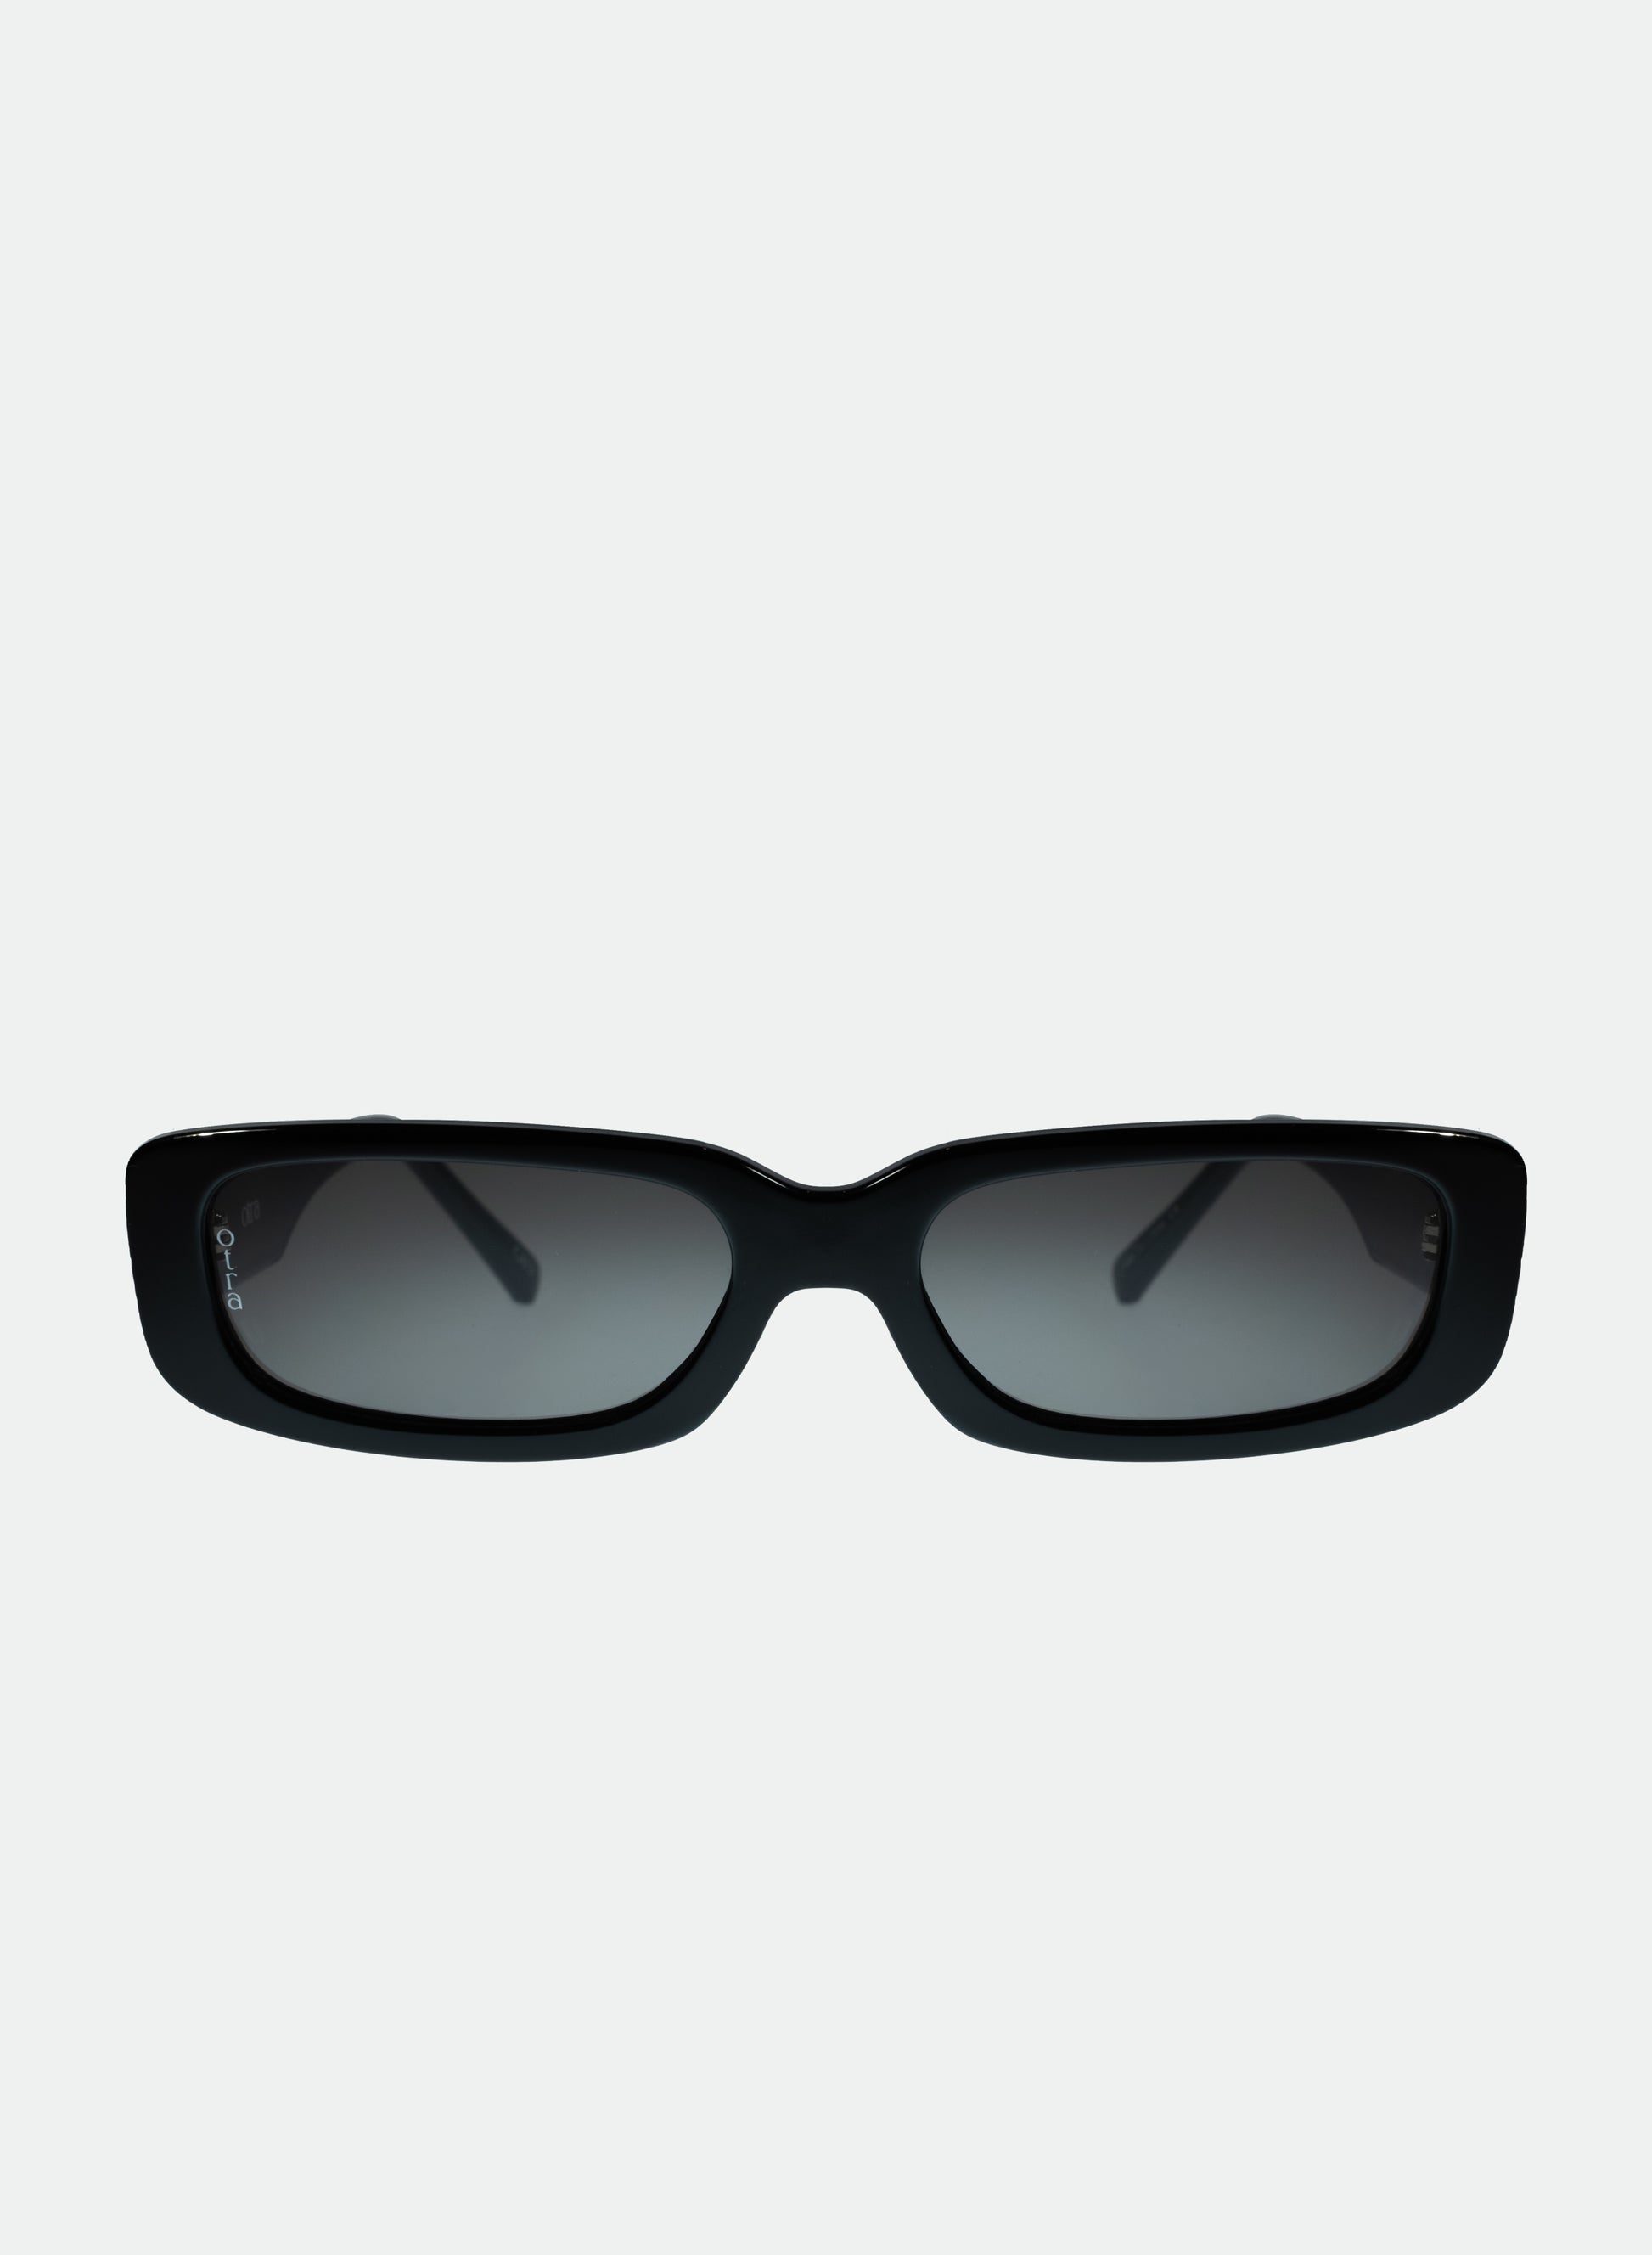 Small flat rectangle SUNNY sunglasses in black